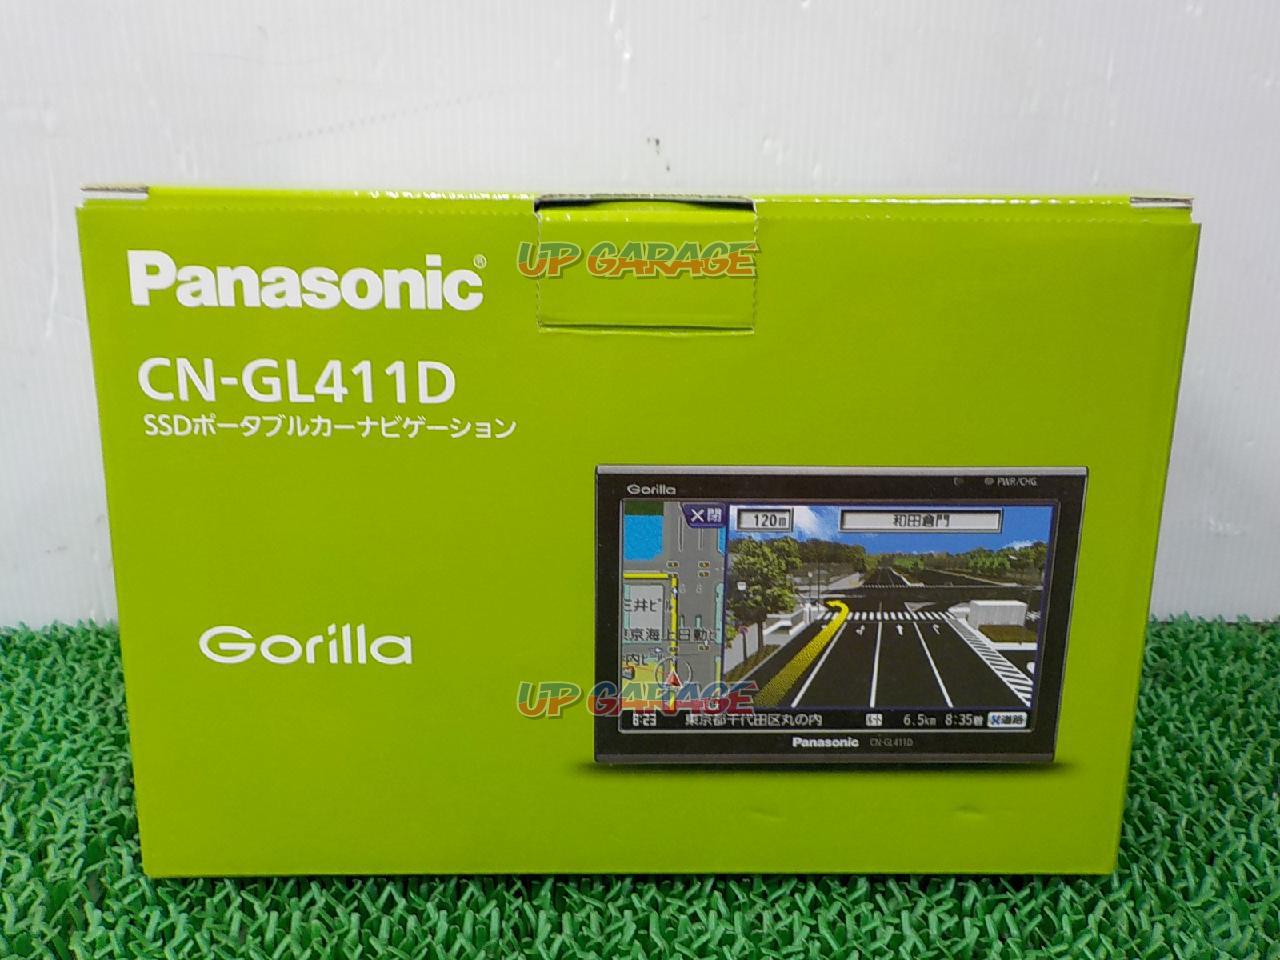 Panasonic CN-GL411D 【ジャイロ搭載で高精度に測位!機能充実のゴリラ